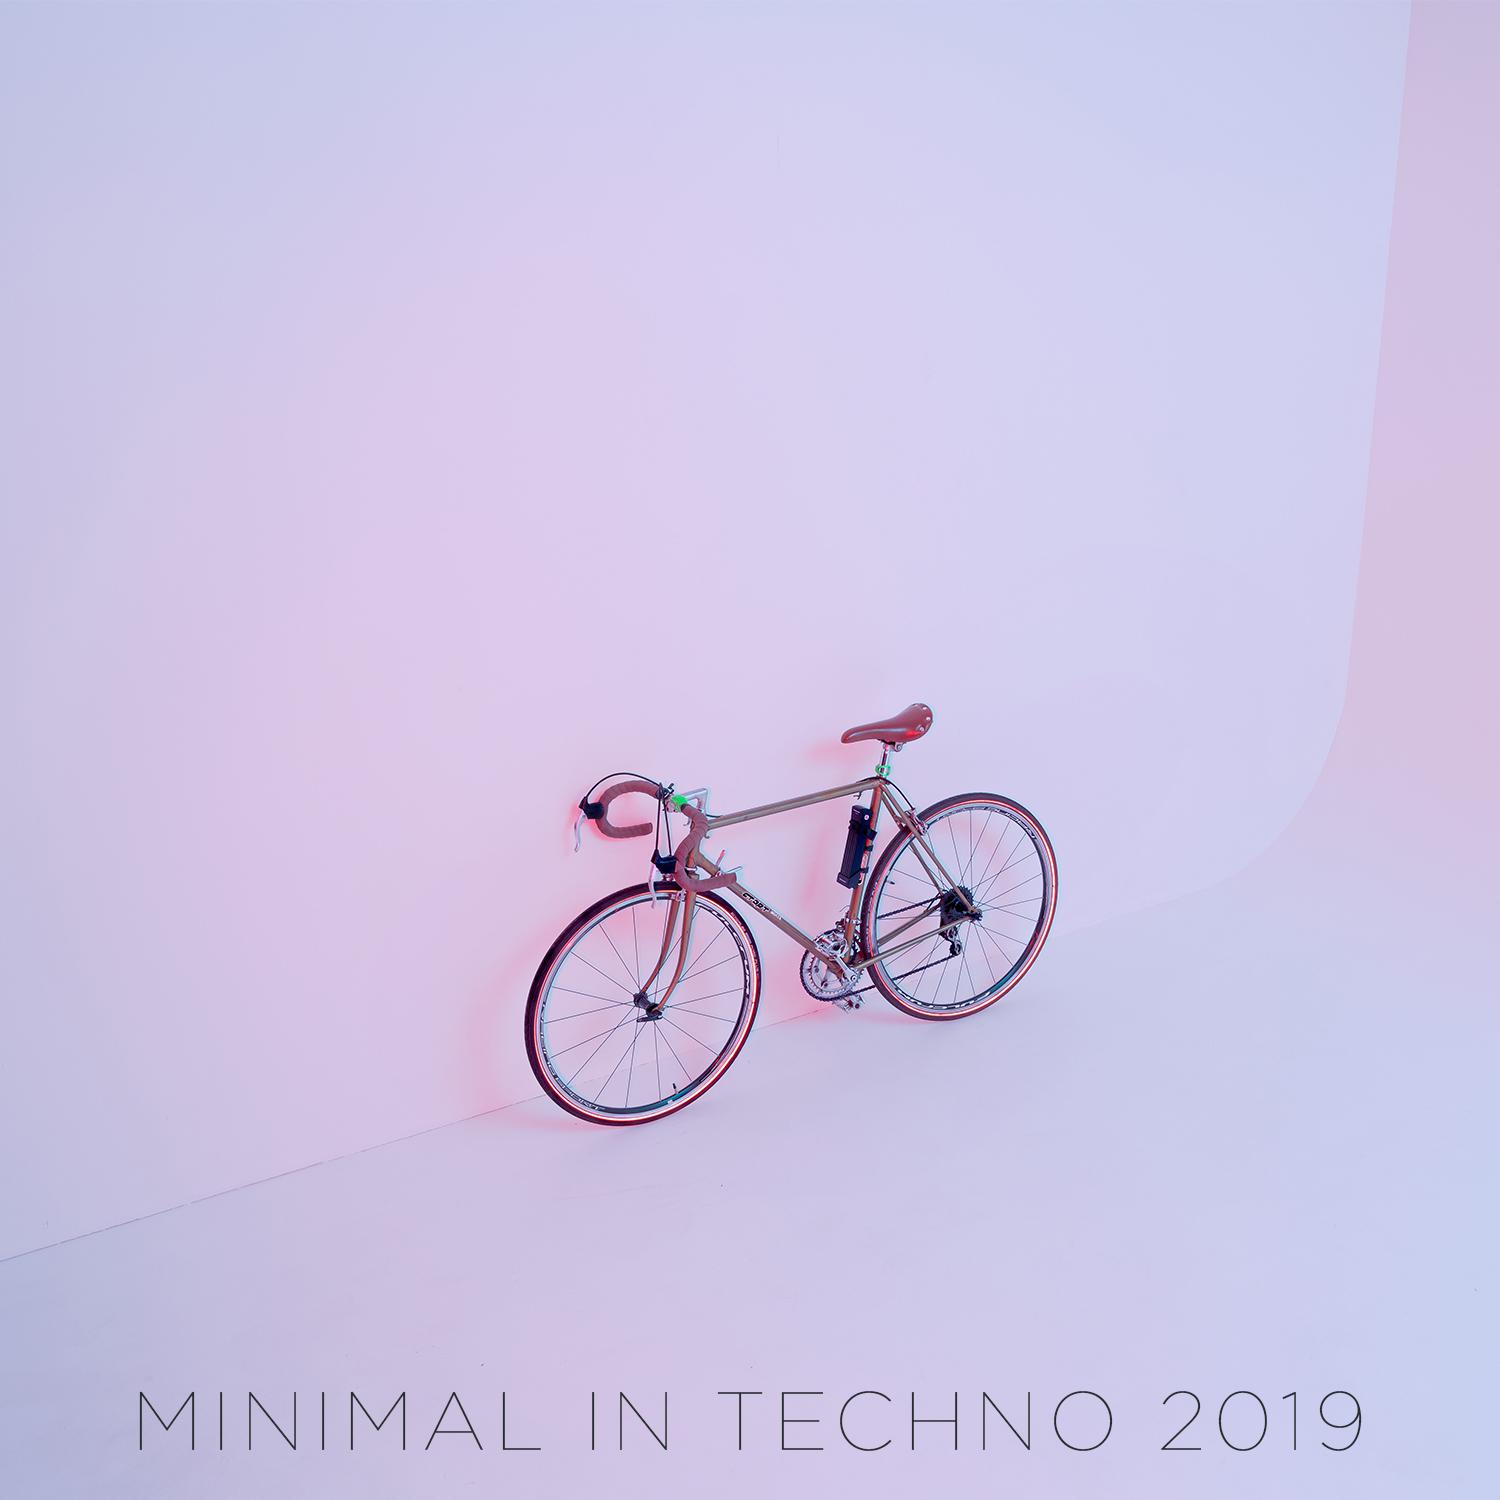 Minimal in Techno 2019